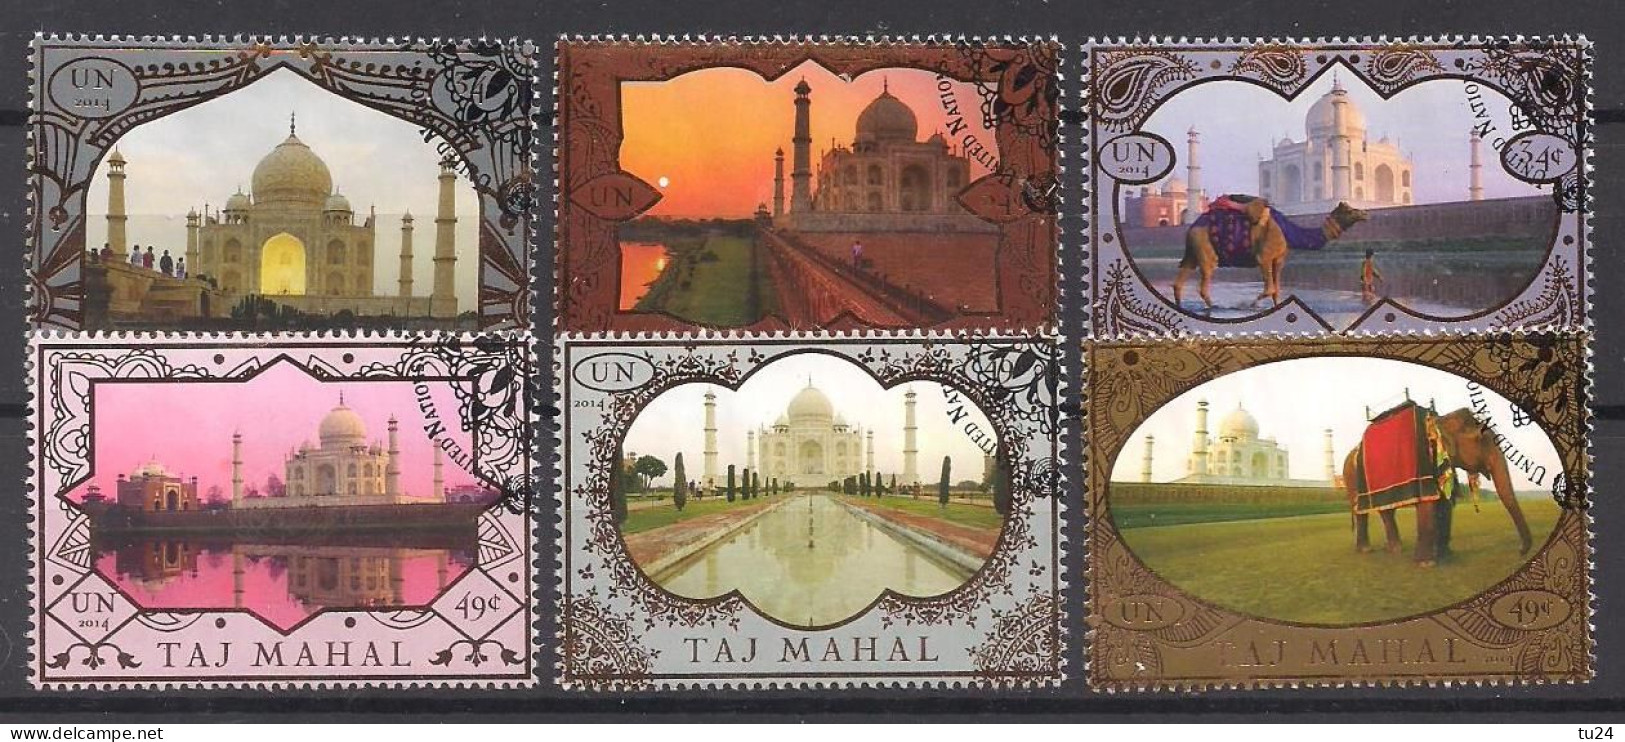 UNO  New York  (2014)  Mi.Nr.  1420 - 1425  Gest. / Used  (9hf06) Taj Mahal - Usados